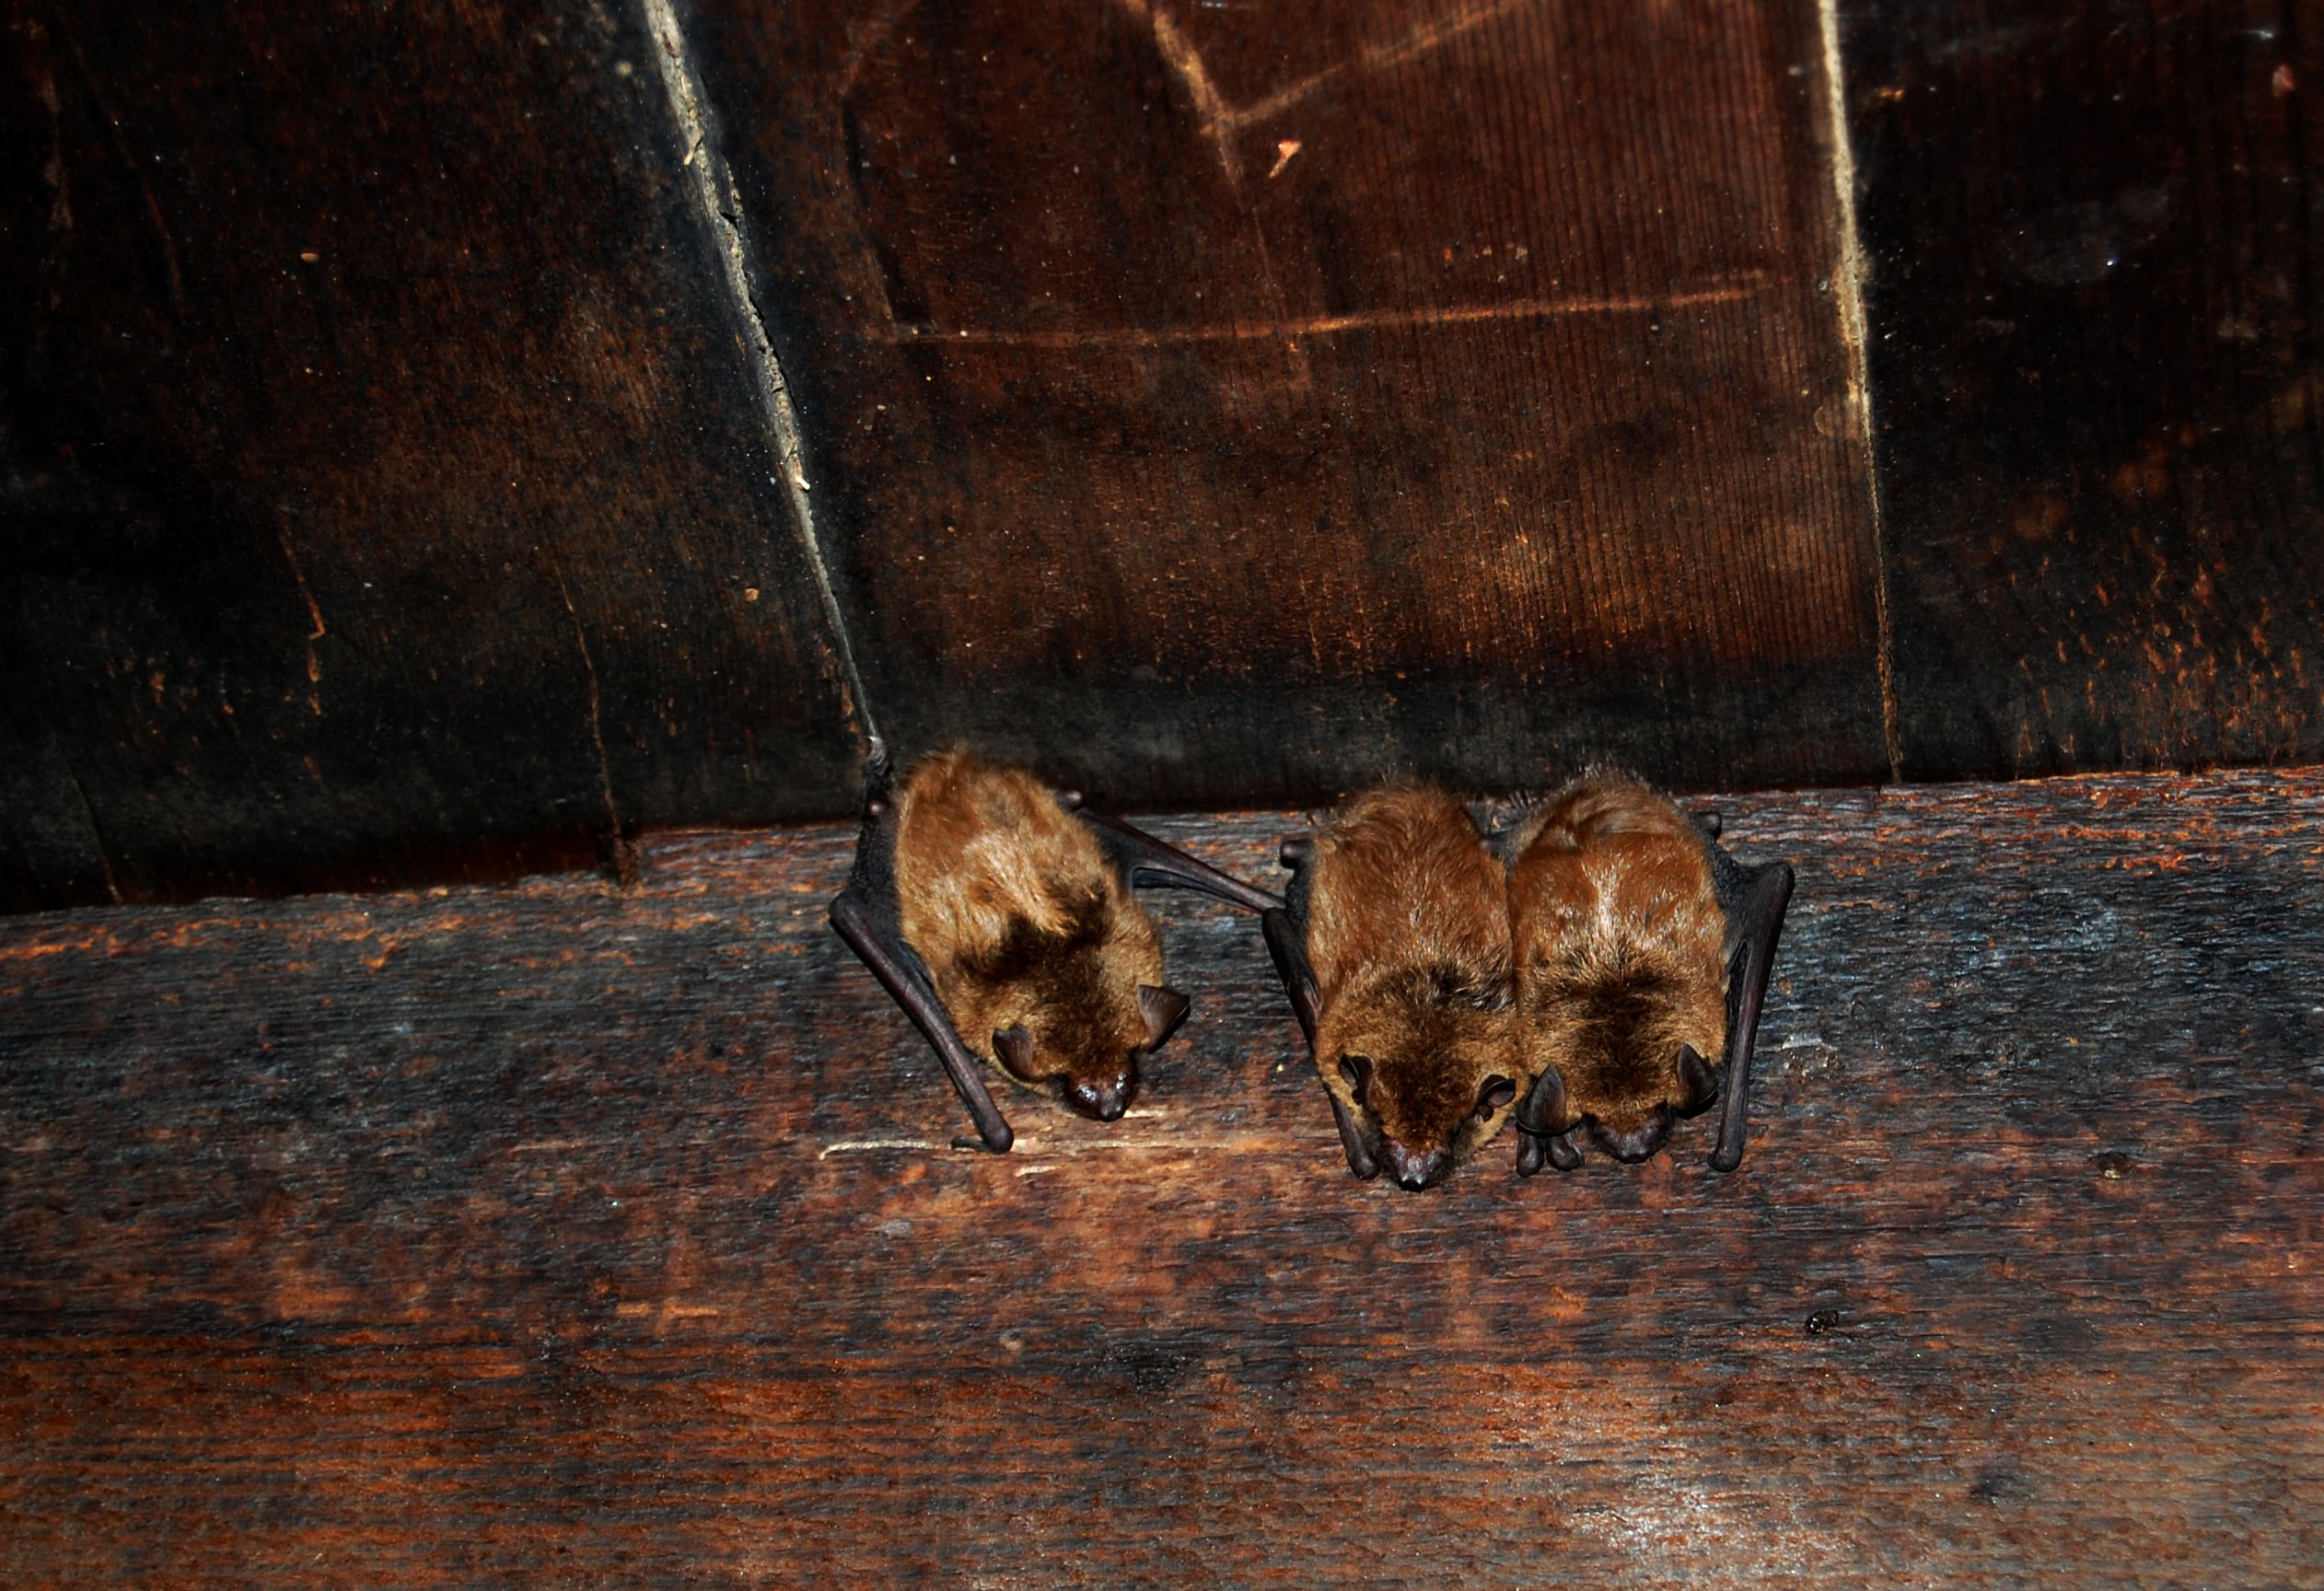 Bats wildlife removal